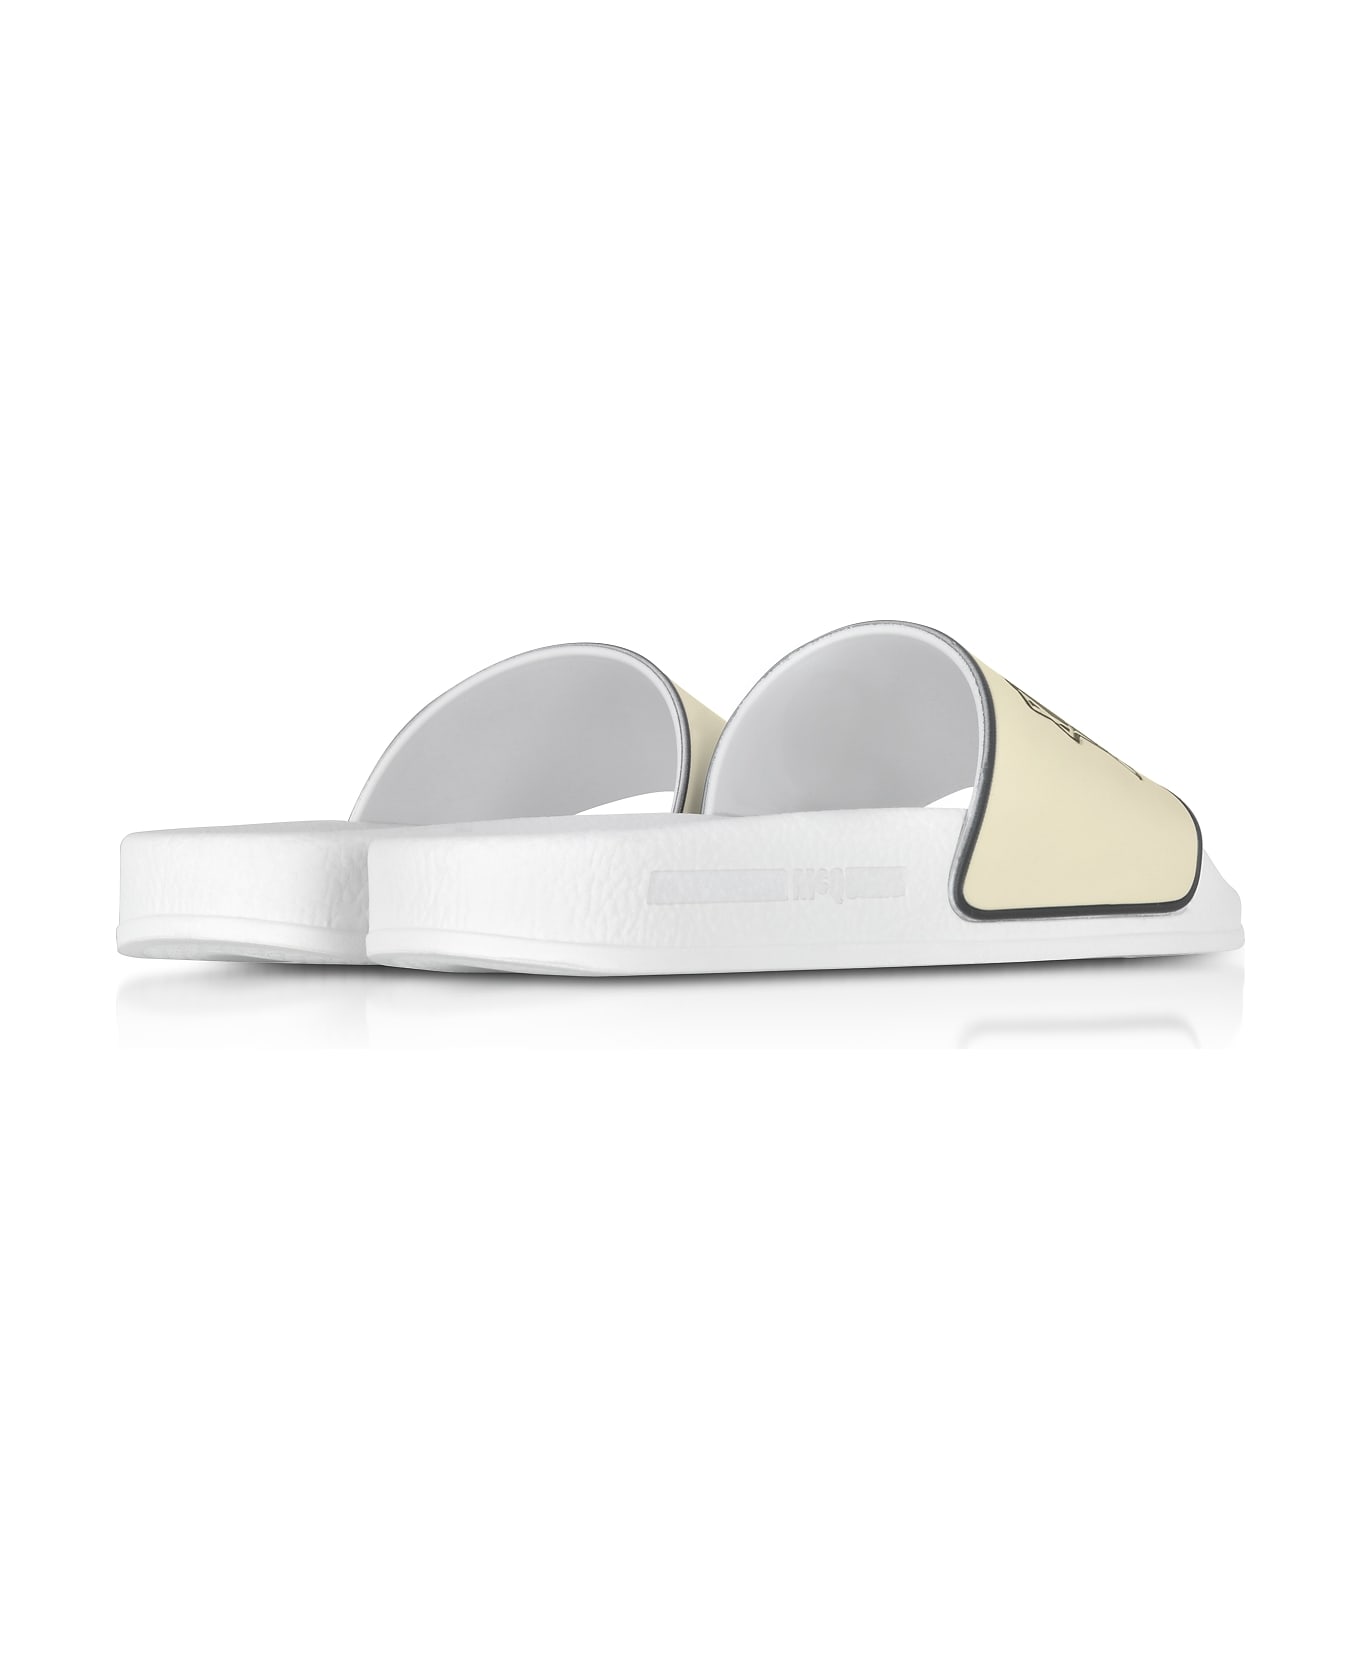 McQ Alexander McQueen White Swallow Slide Sandals - White